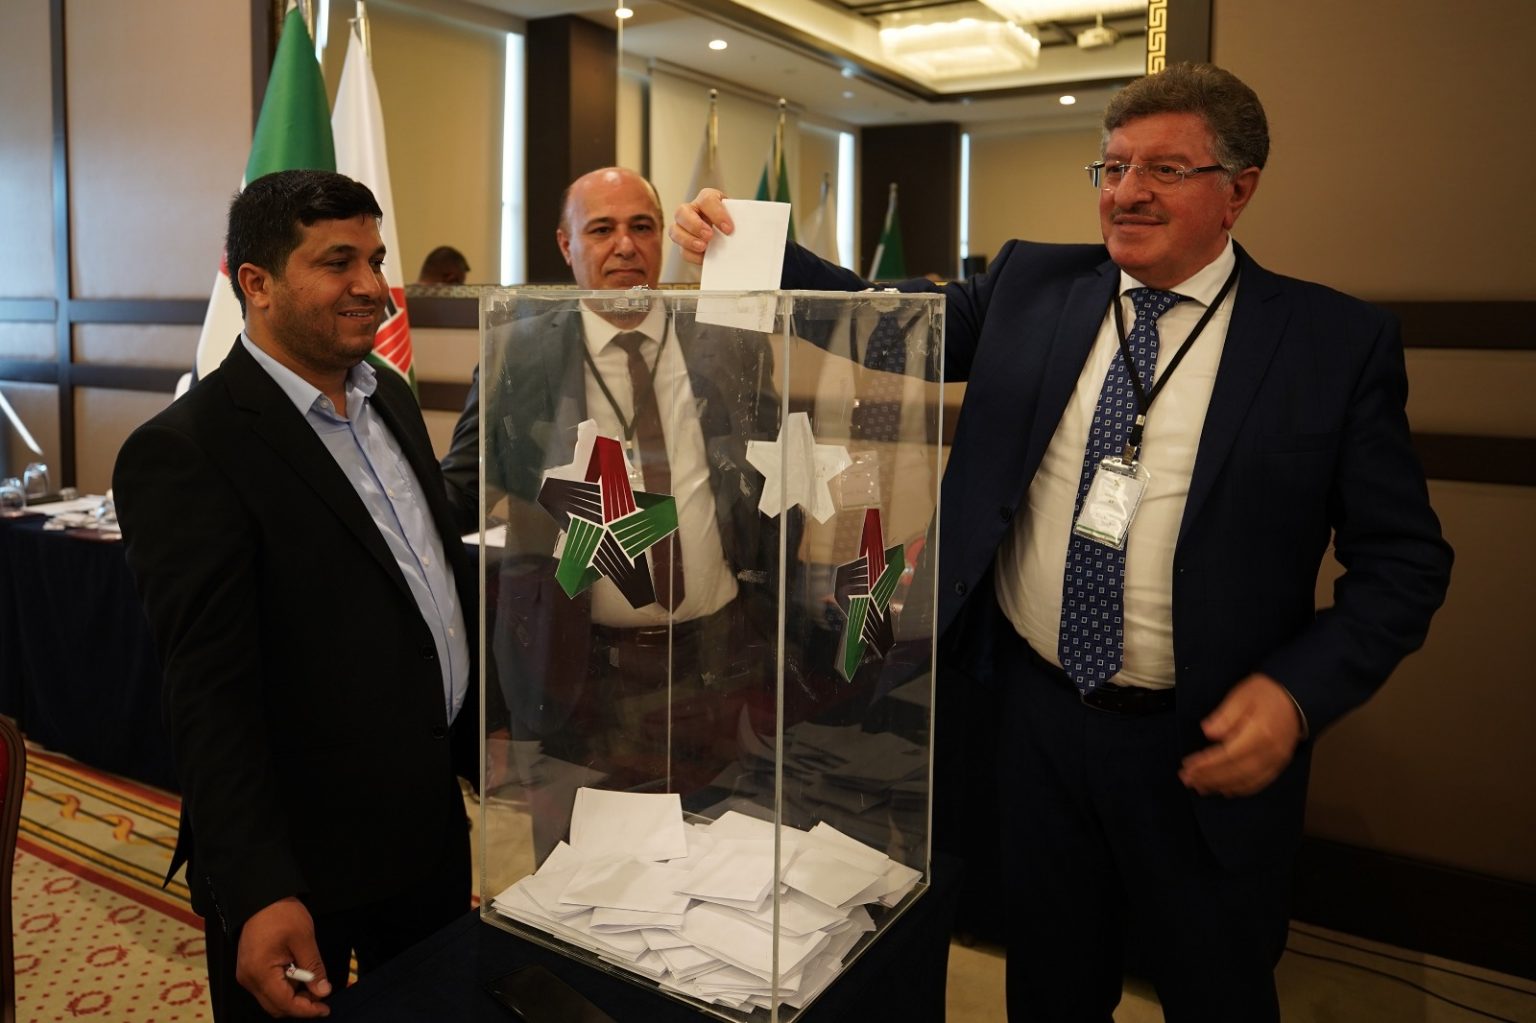 The SOC president Salim al-Muslat casting his vote in the ballot box (SOC).